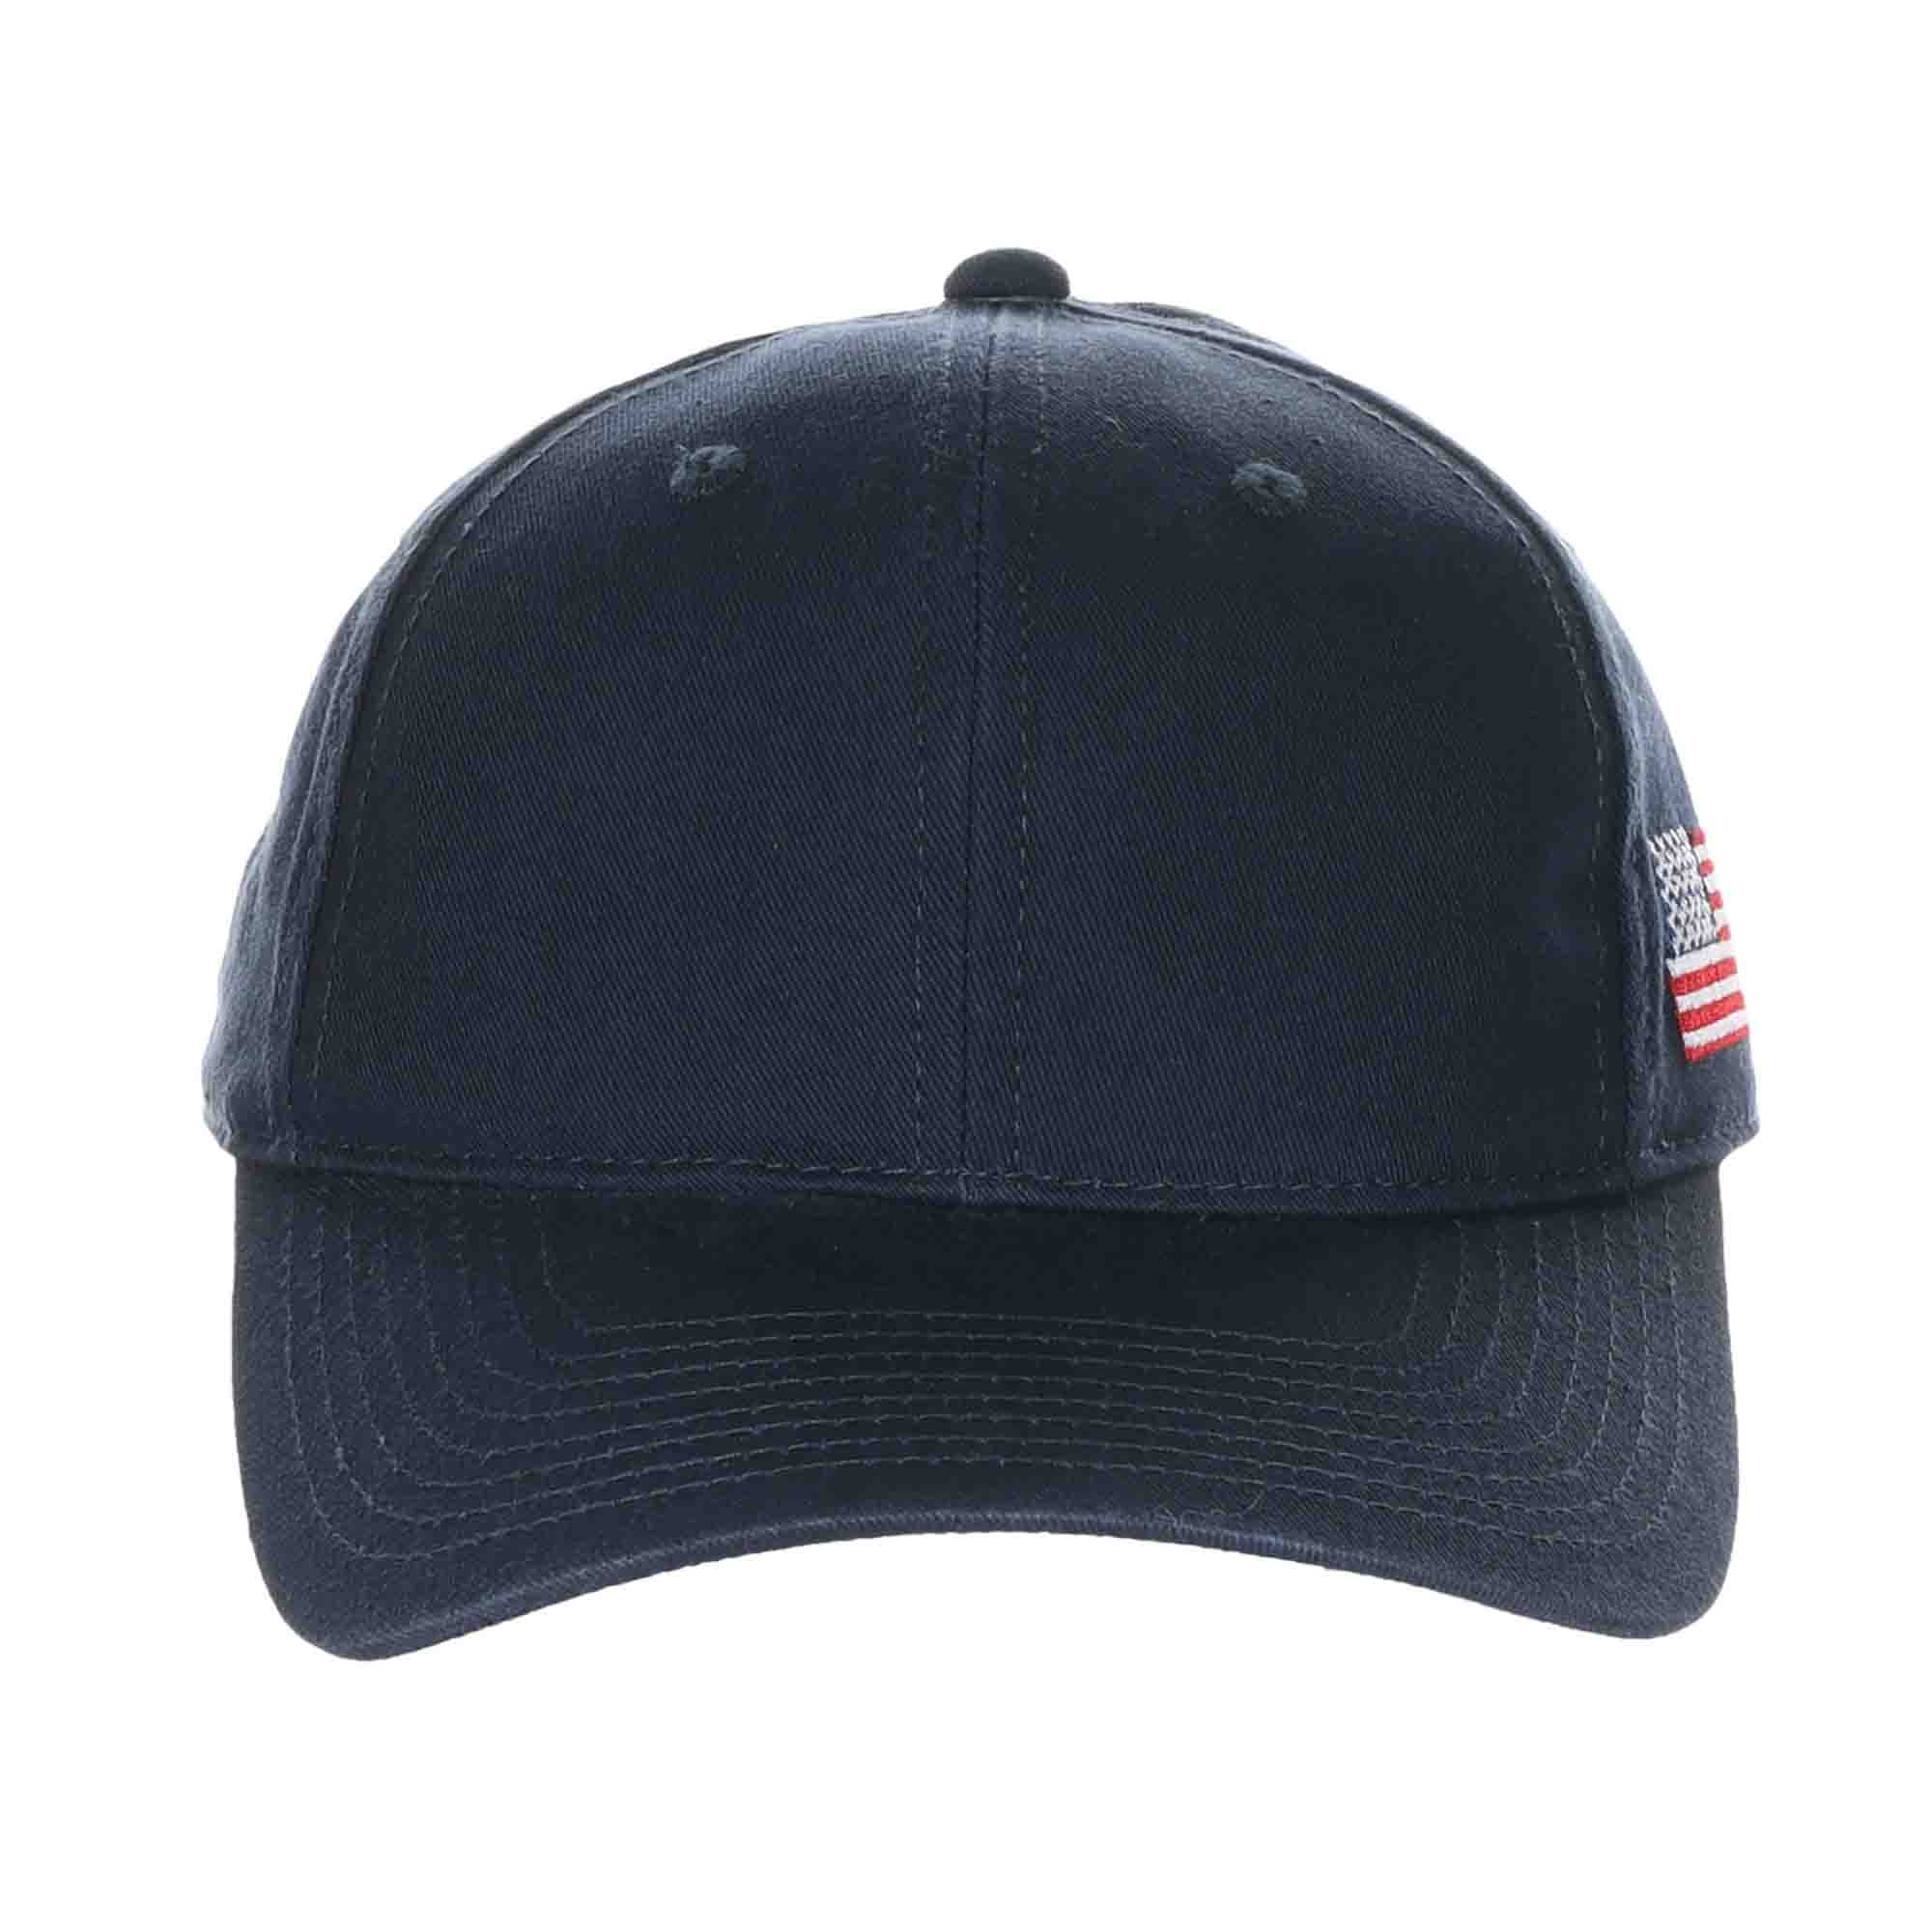 Top Gun USA Flag Structured Cotton Baseball Cap - DPC Hats Khaki / Os